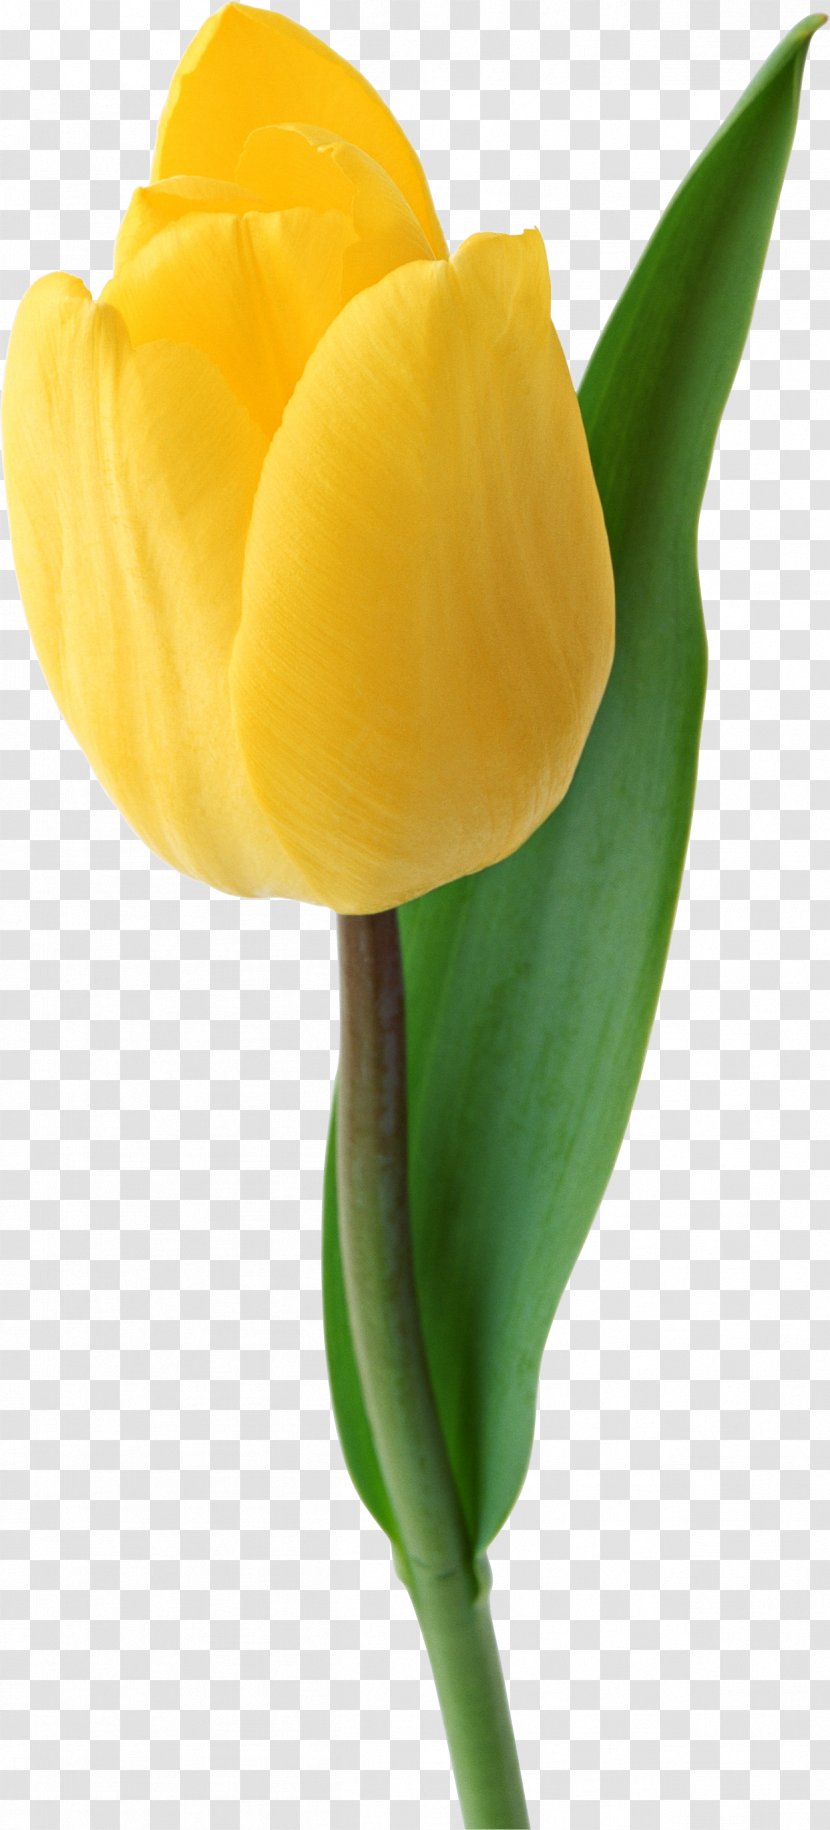 Liriodendron Tulipifera Yellow Flower - Tulip Image Transparent PNG